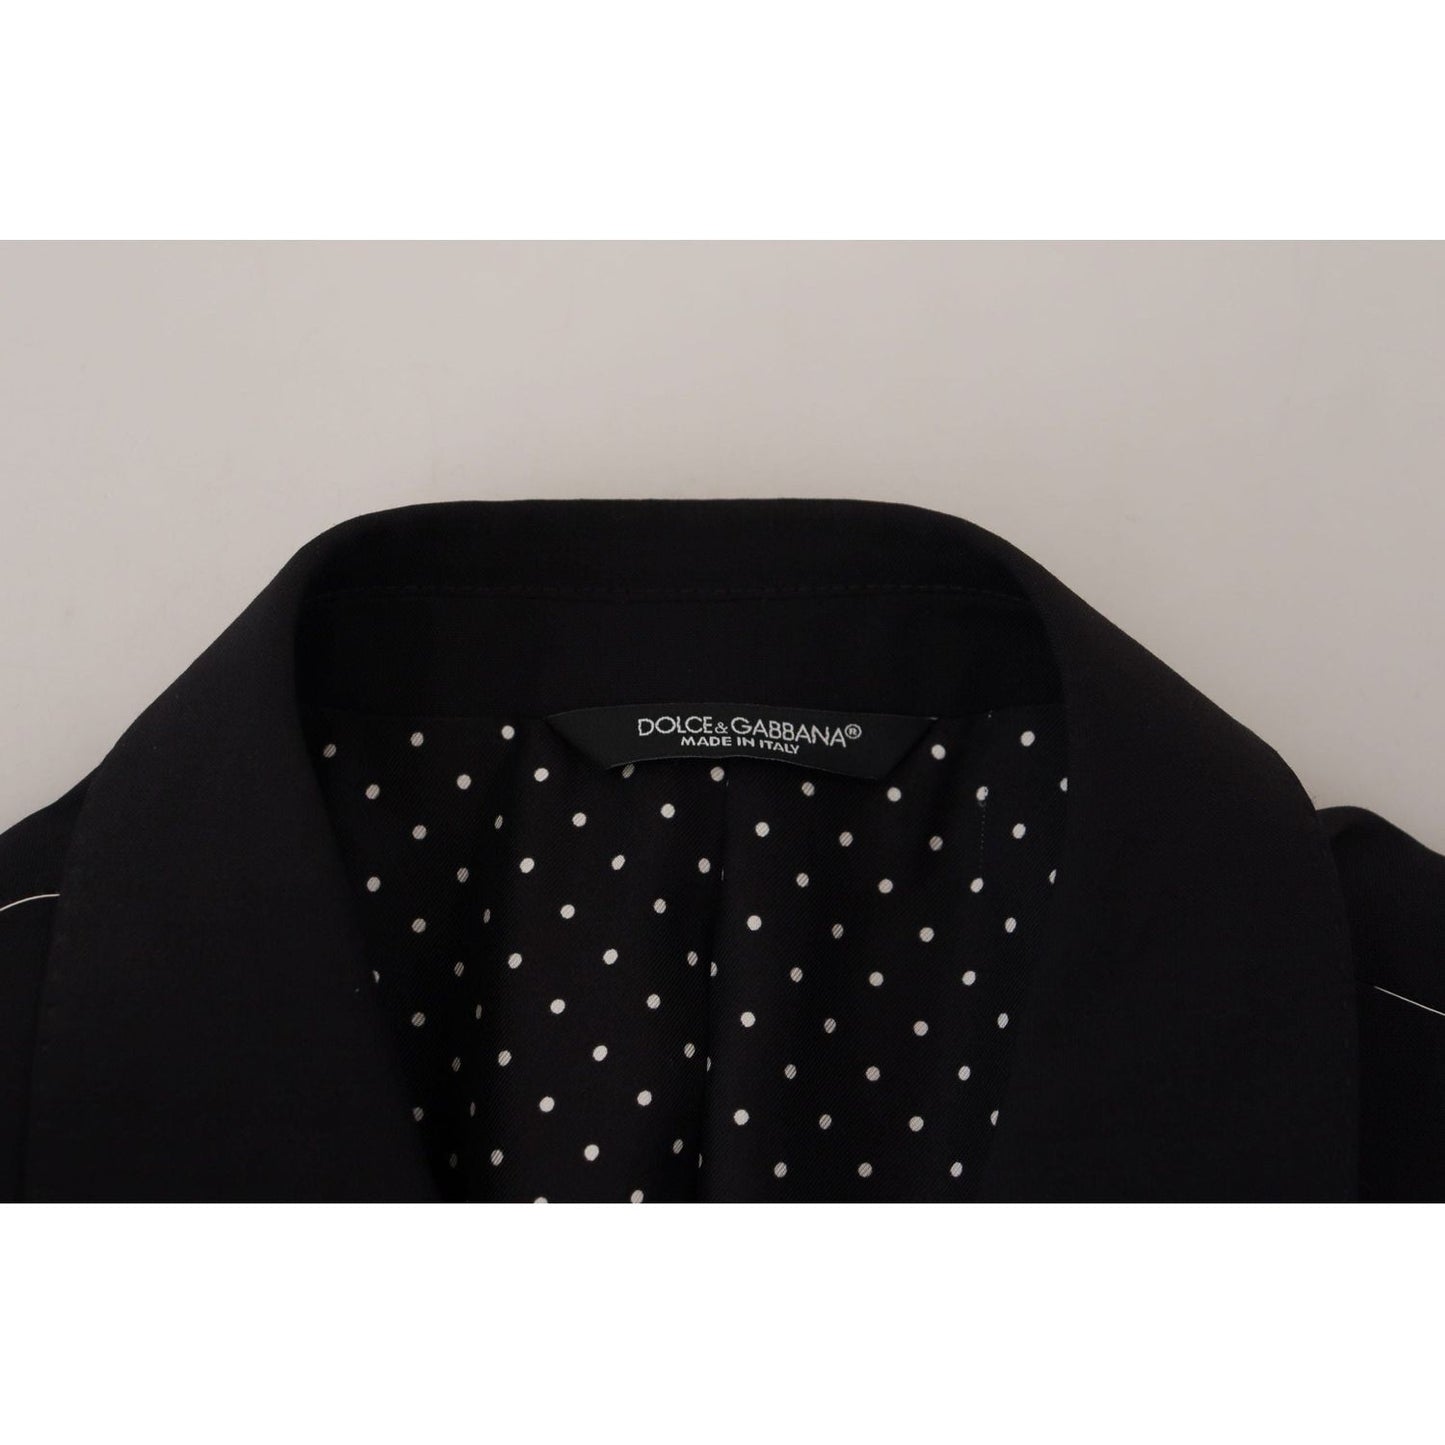 Dolce & Gabbana Sicilian Style Black Single Breasted Blazer black-wool-stretch-slim-fit-jacket-blazer-1